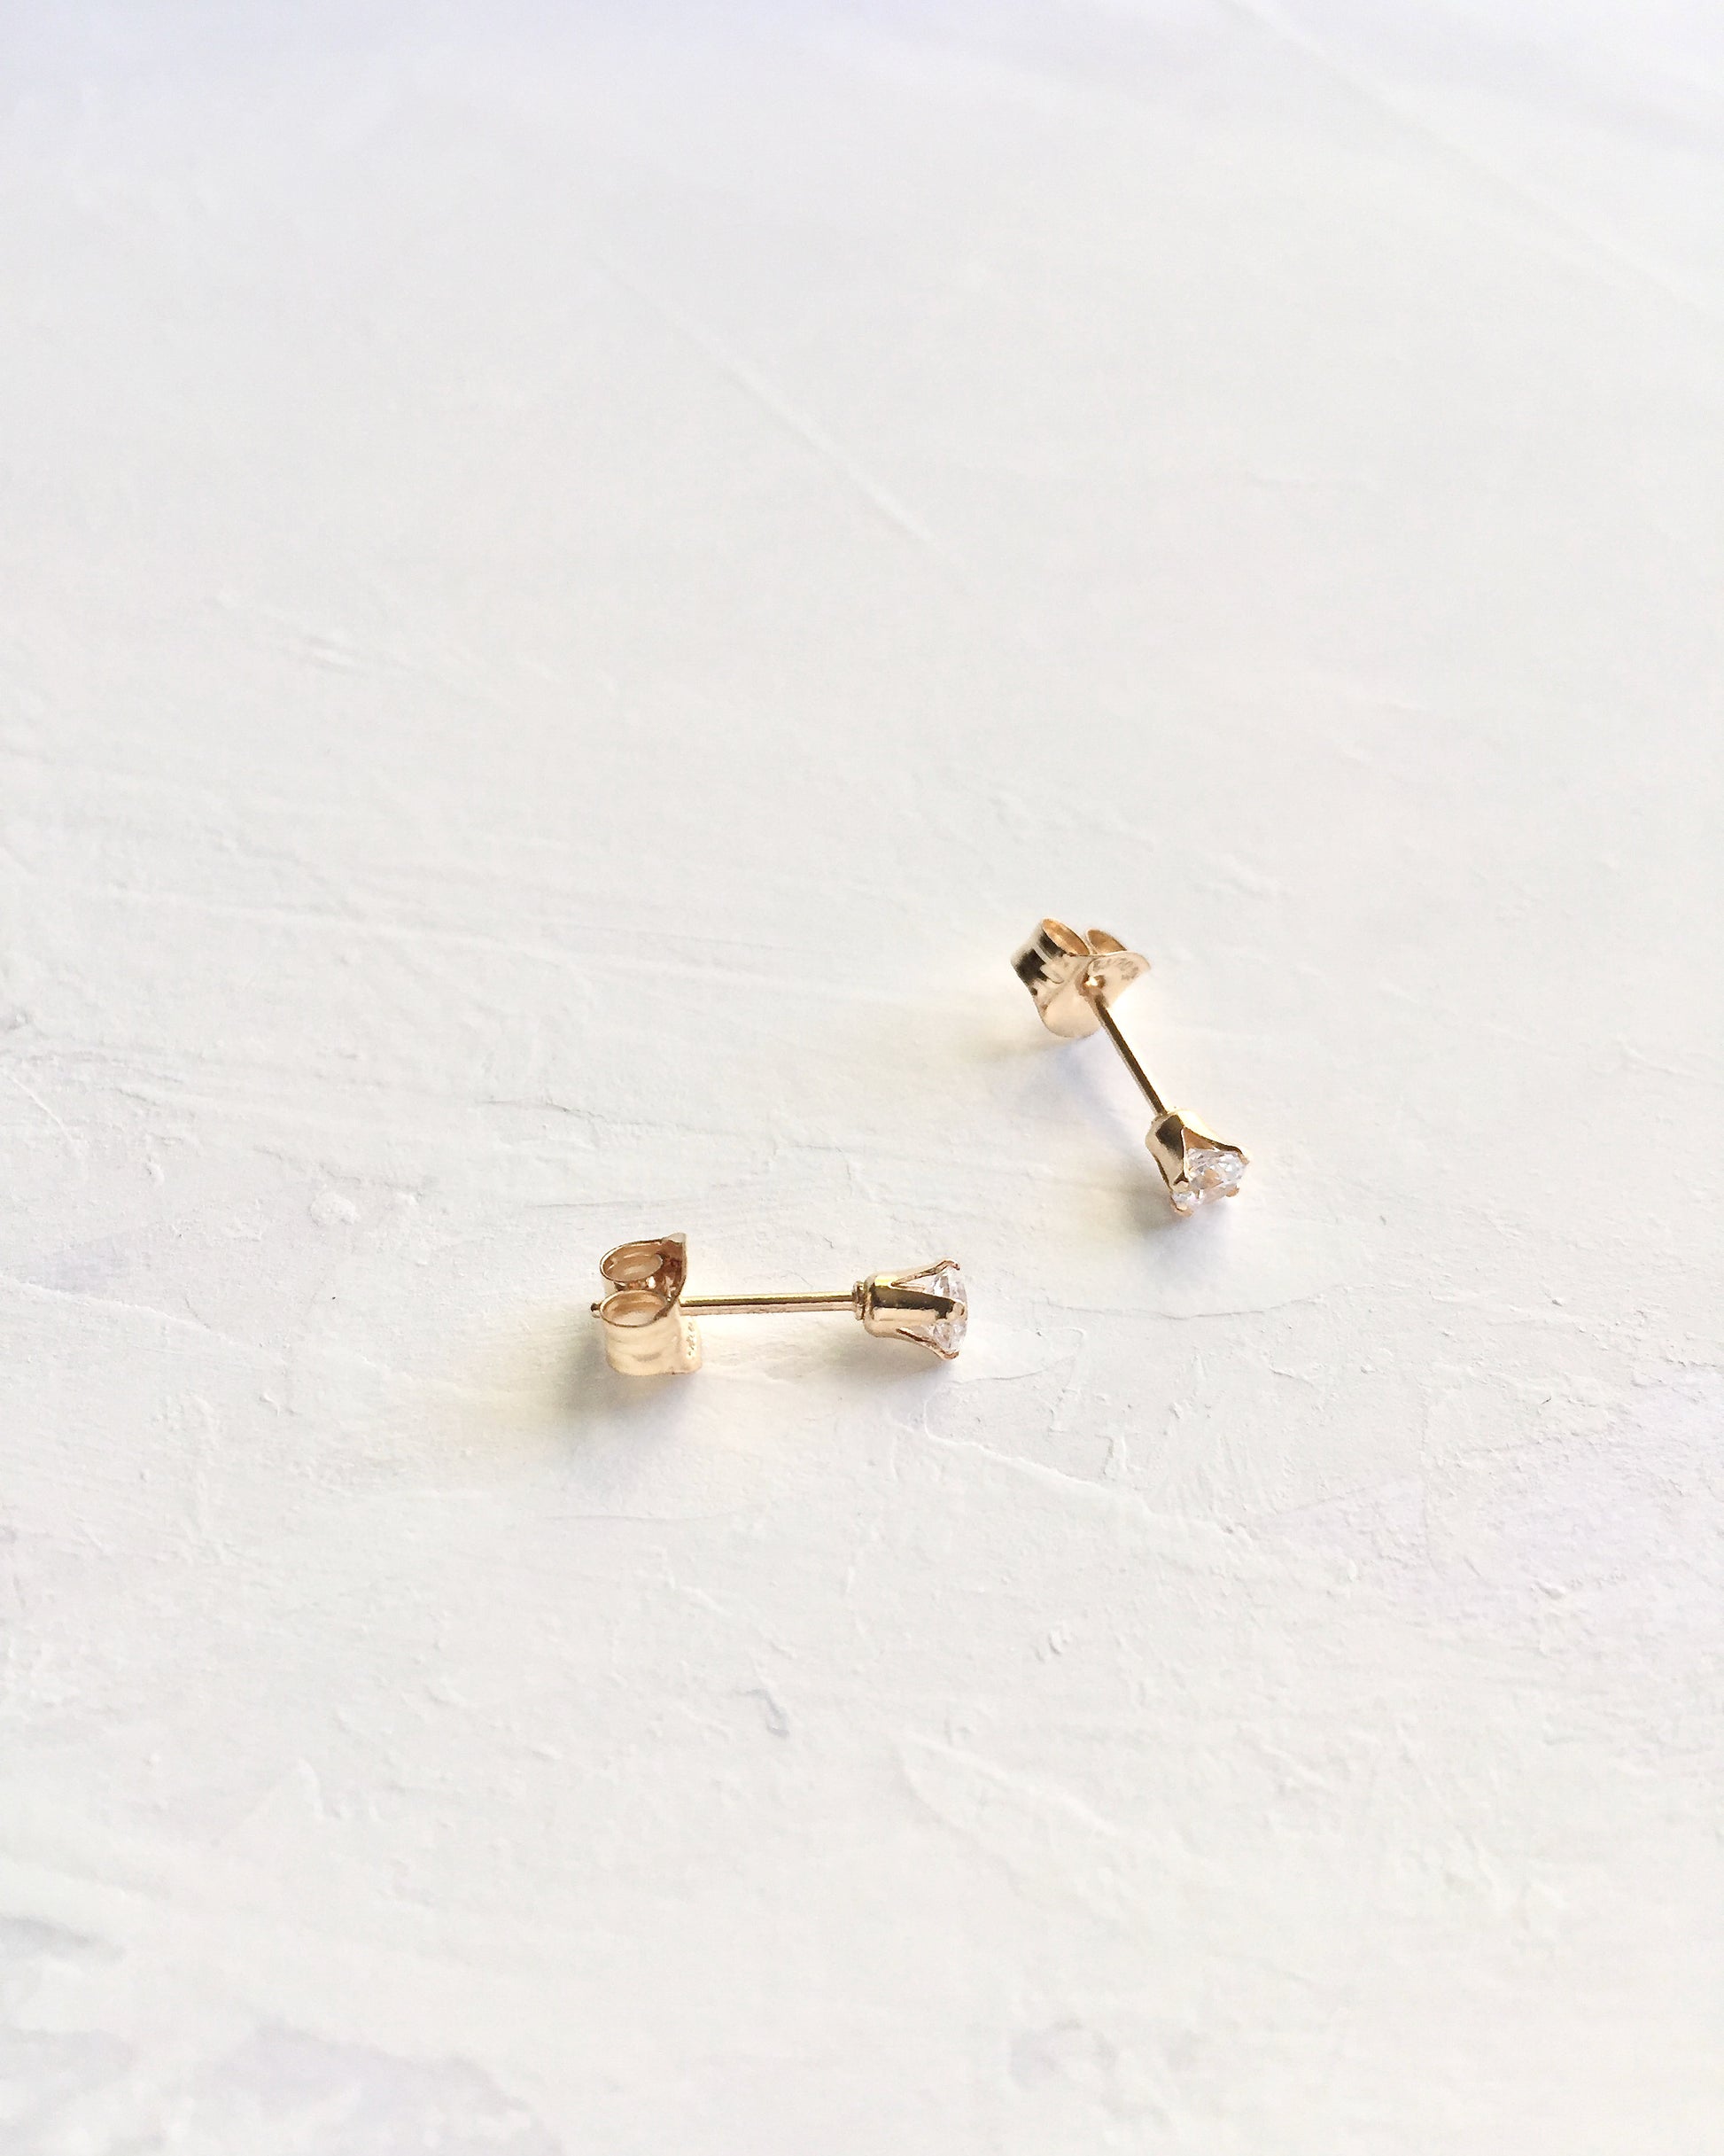 Minimalist Everyday Earrings | Tiny CZ Stud Earrings | Delicate Stud Earrings In Gold Filled or Sterling Silver | IB Jewelry